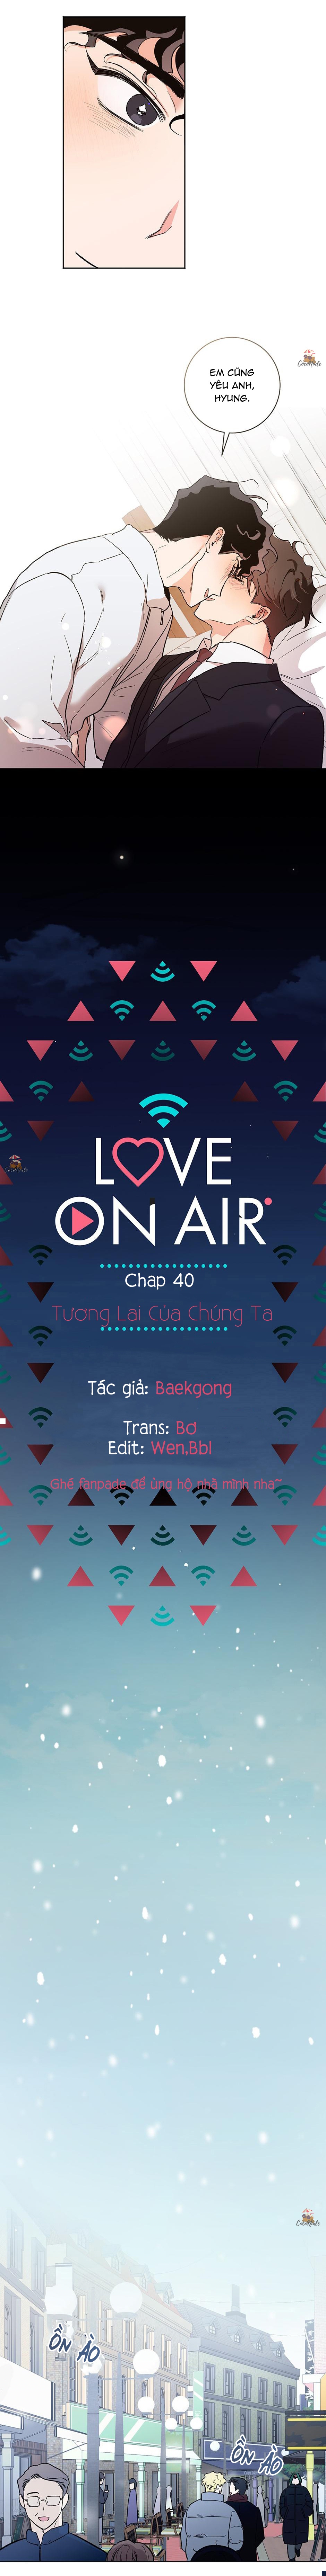 love-on-air-chap-40-10